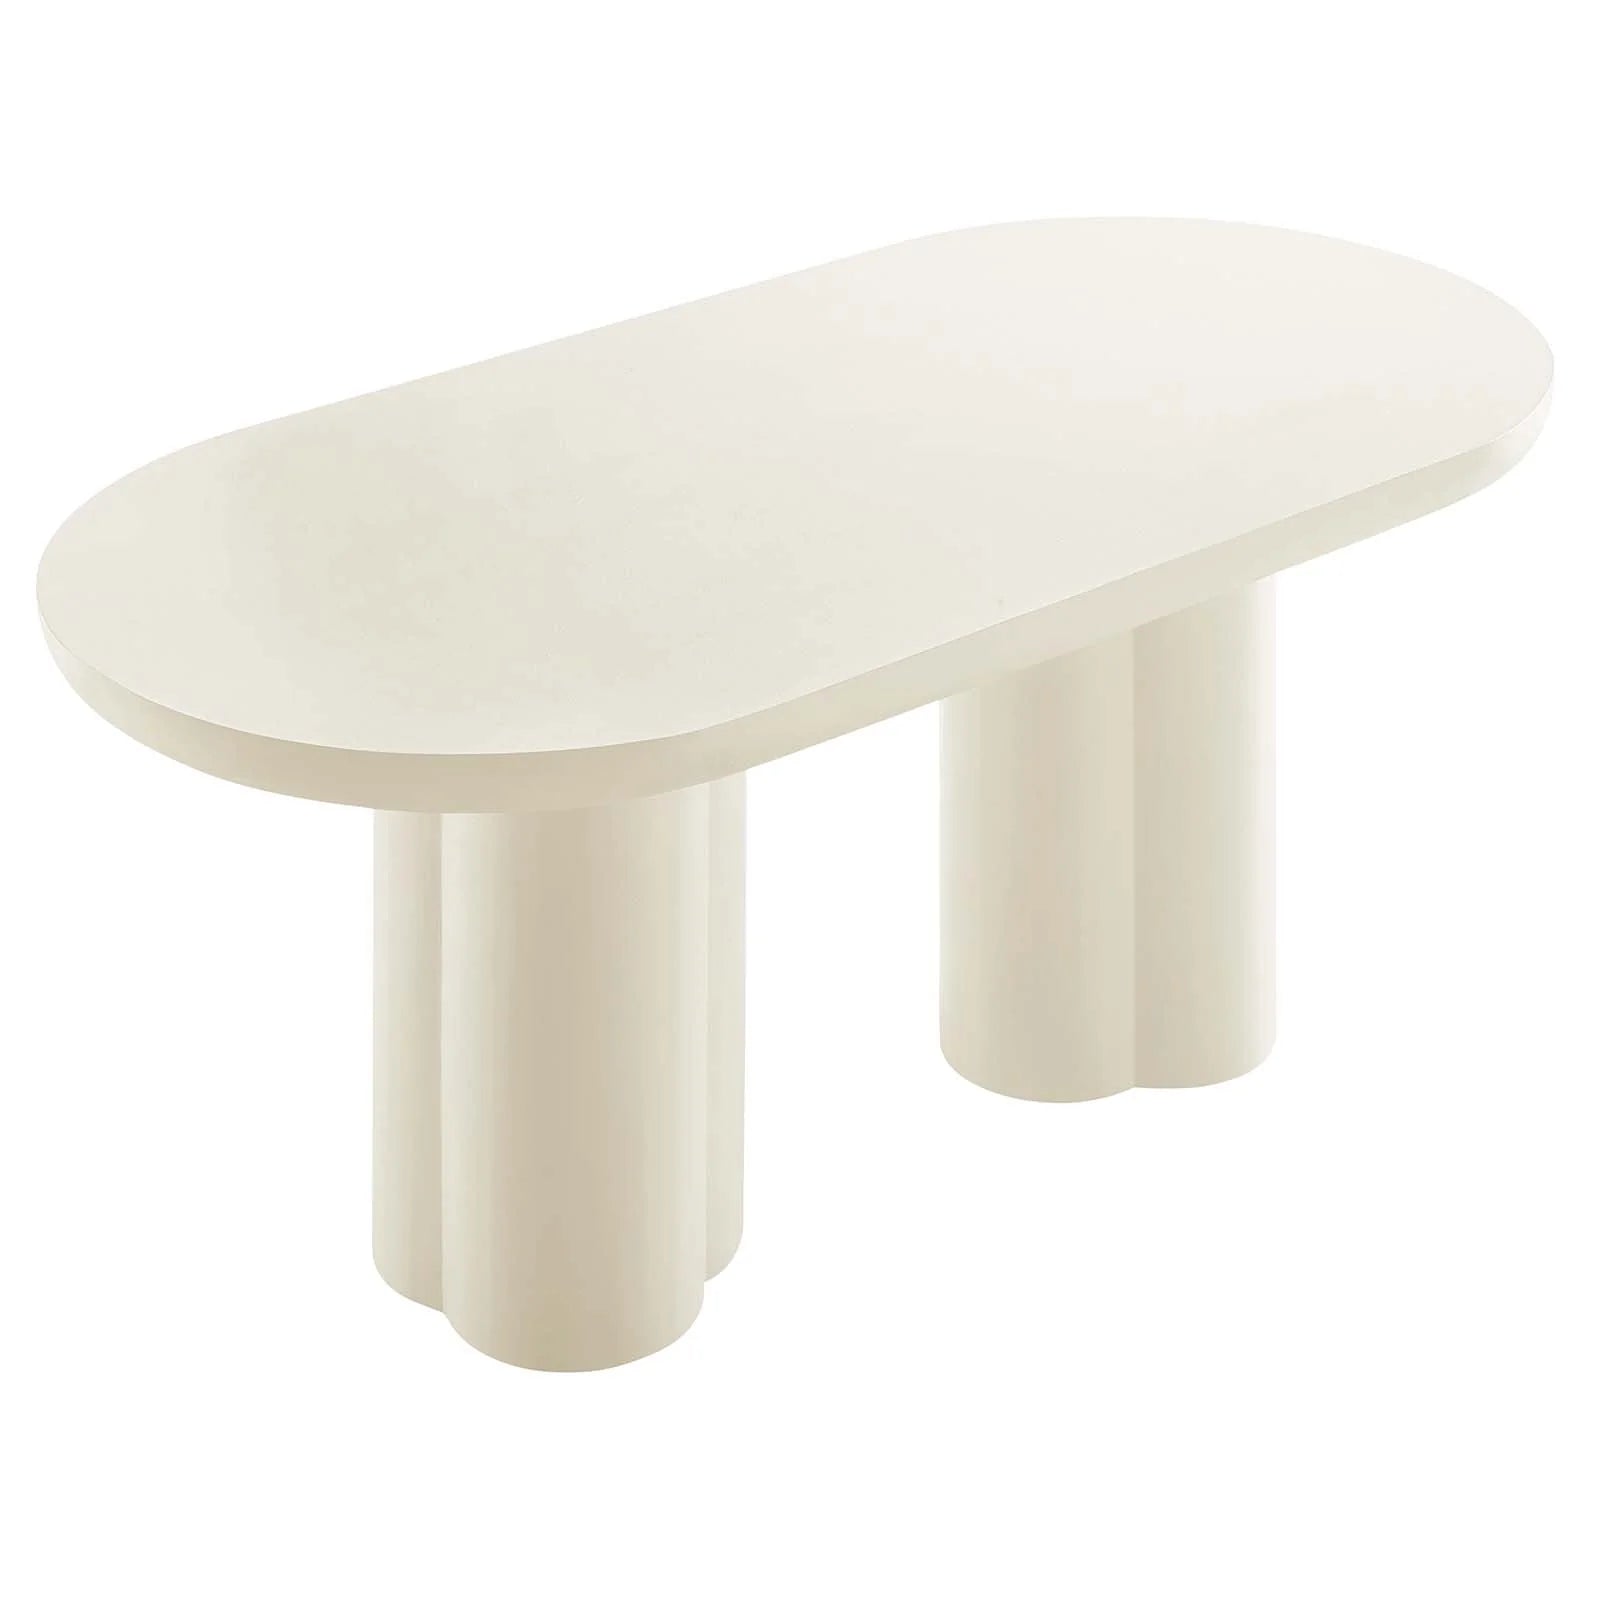 Casper Oval Concrete Dining Table - White